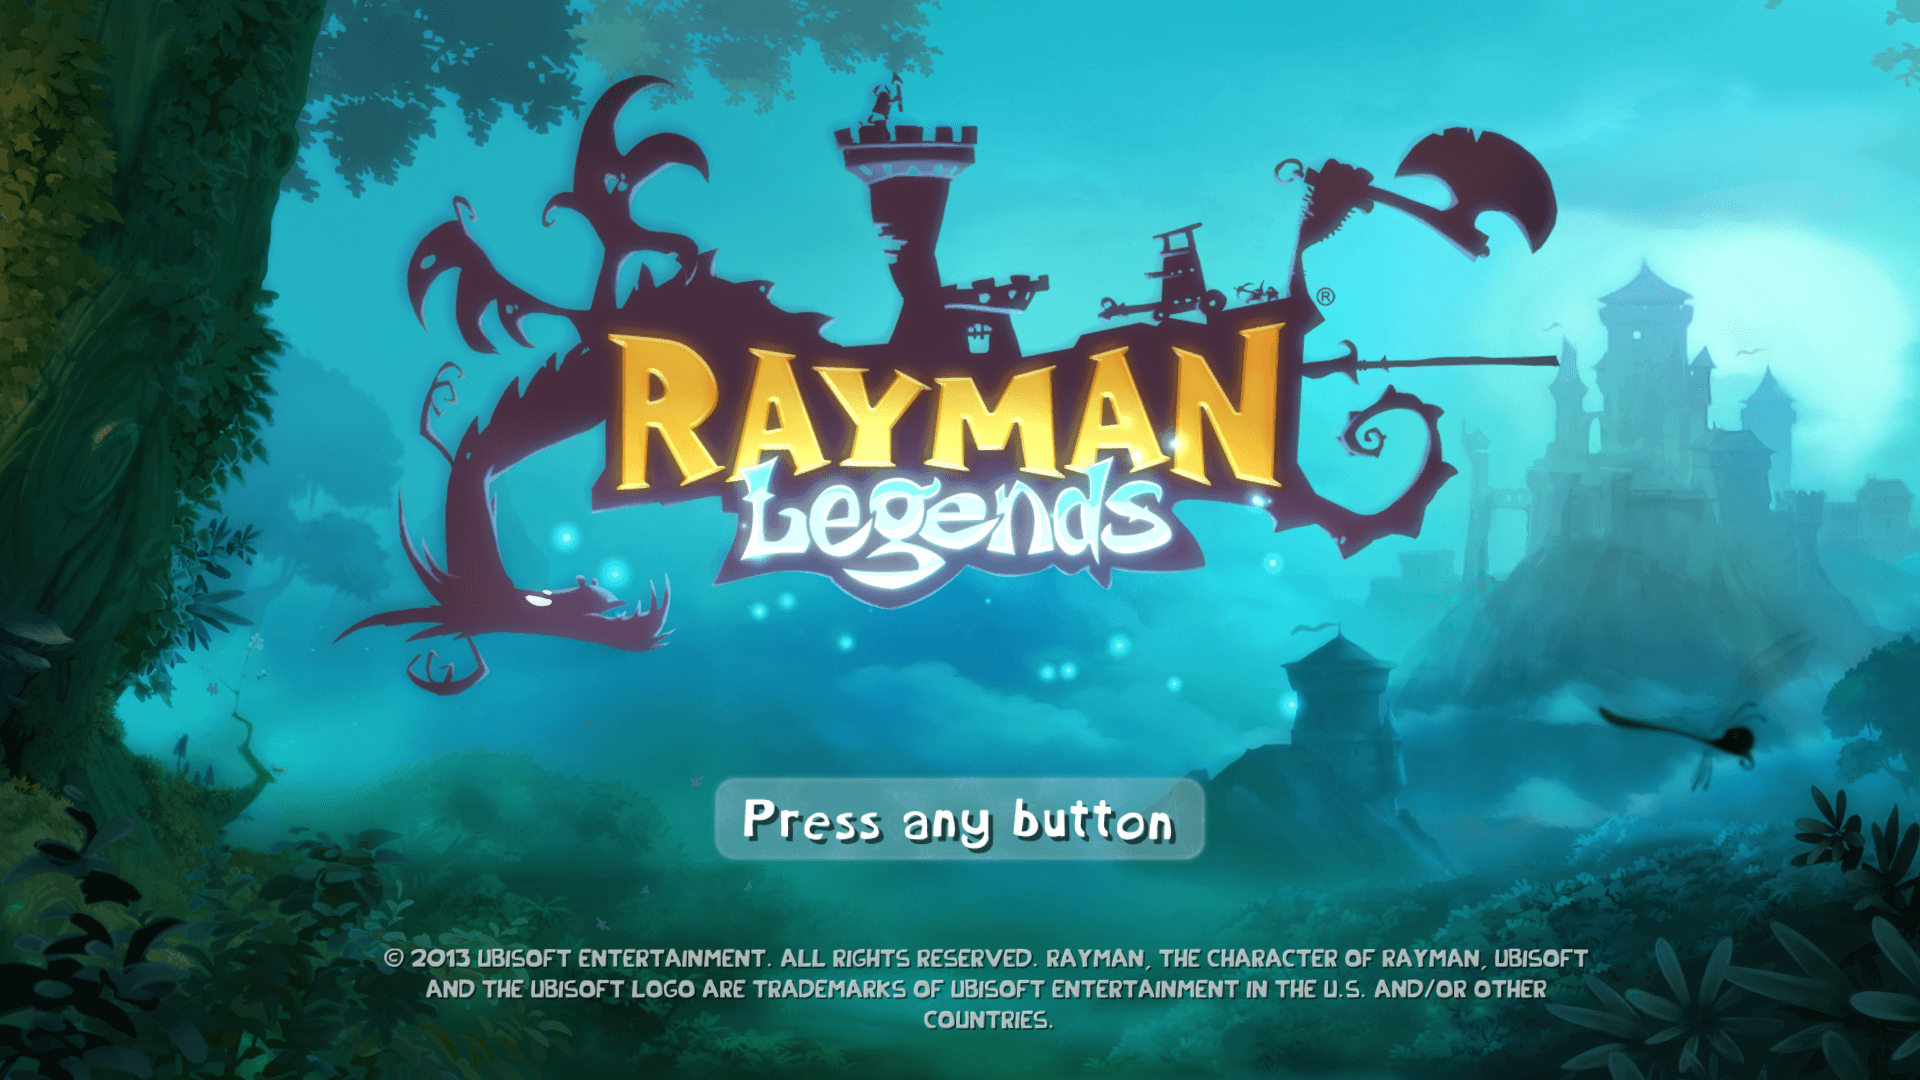 Rayman Legends  UI Narrative - UX and Visual Design Education